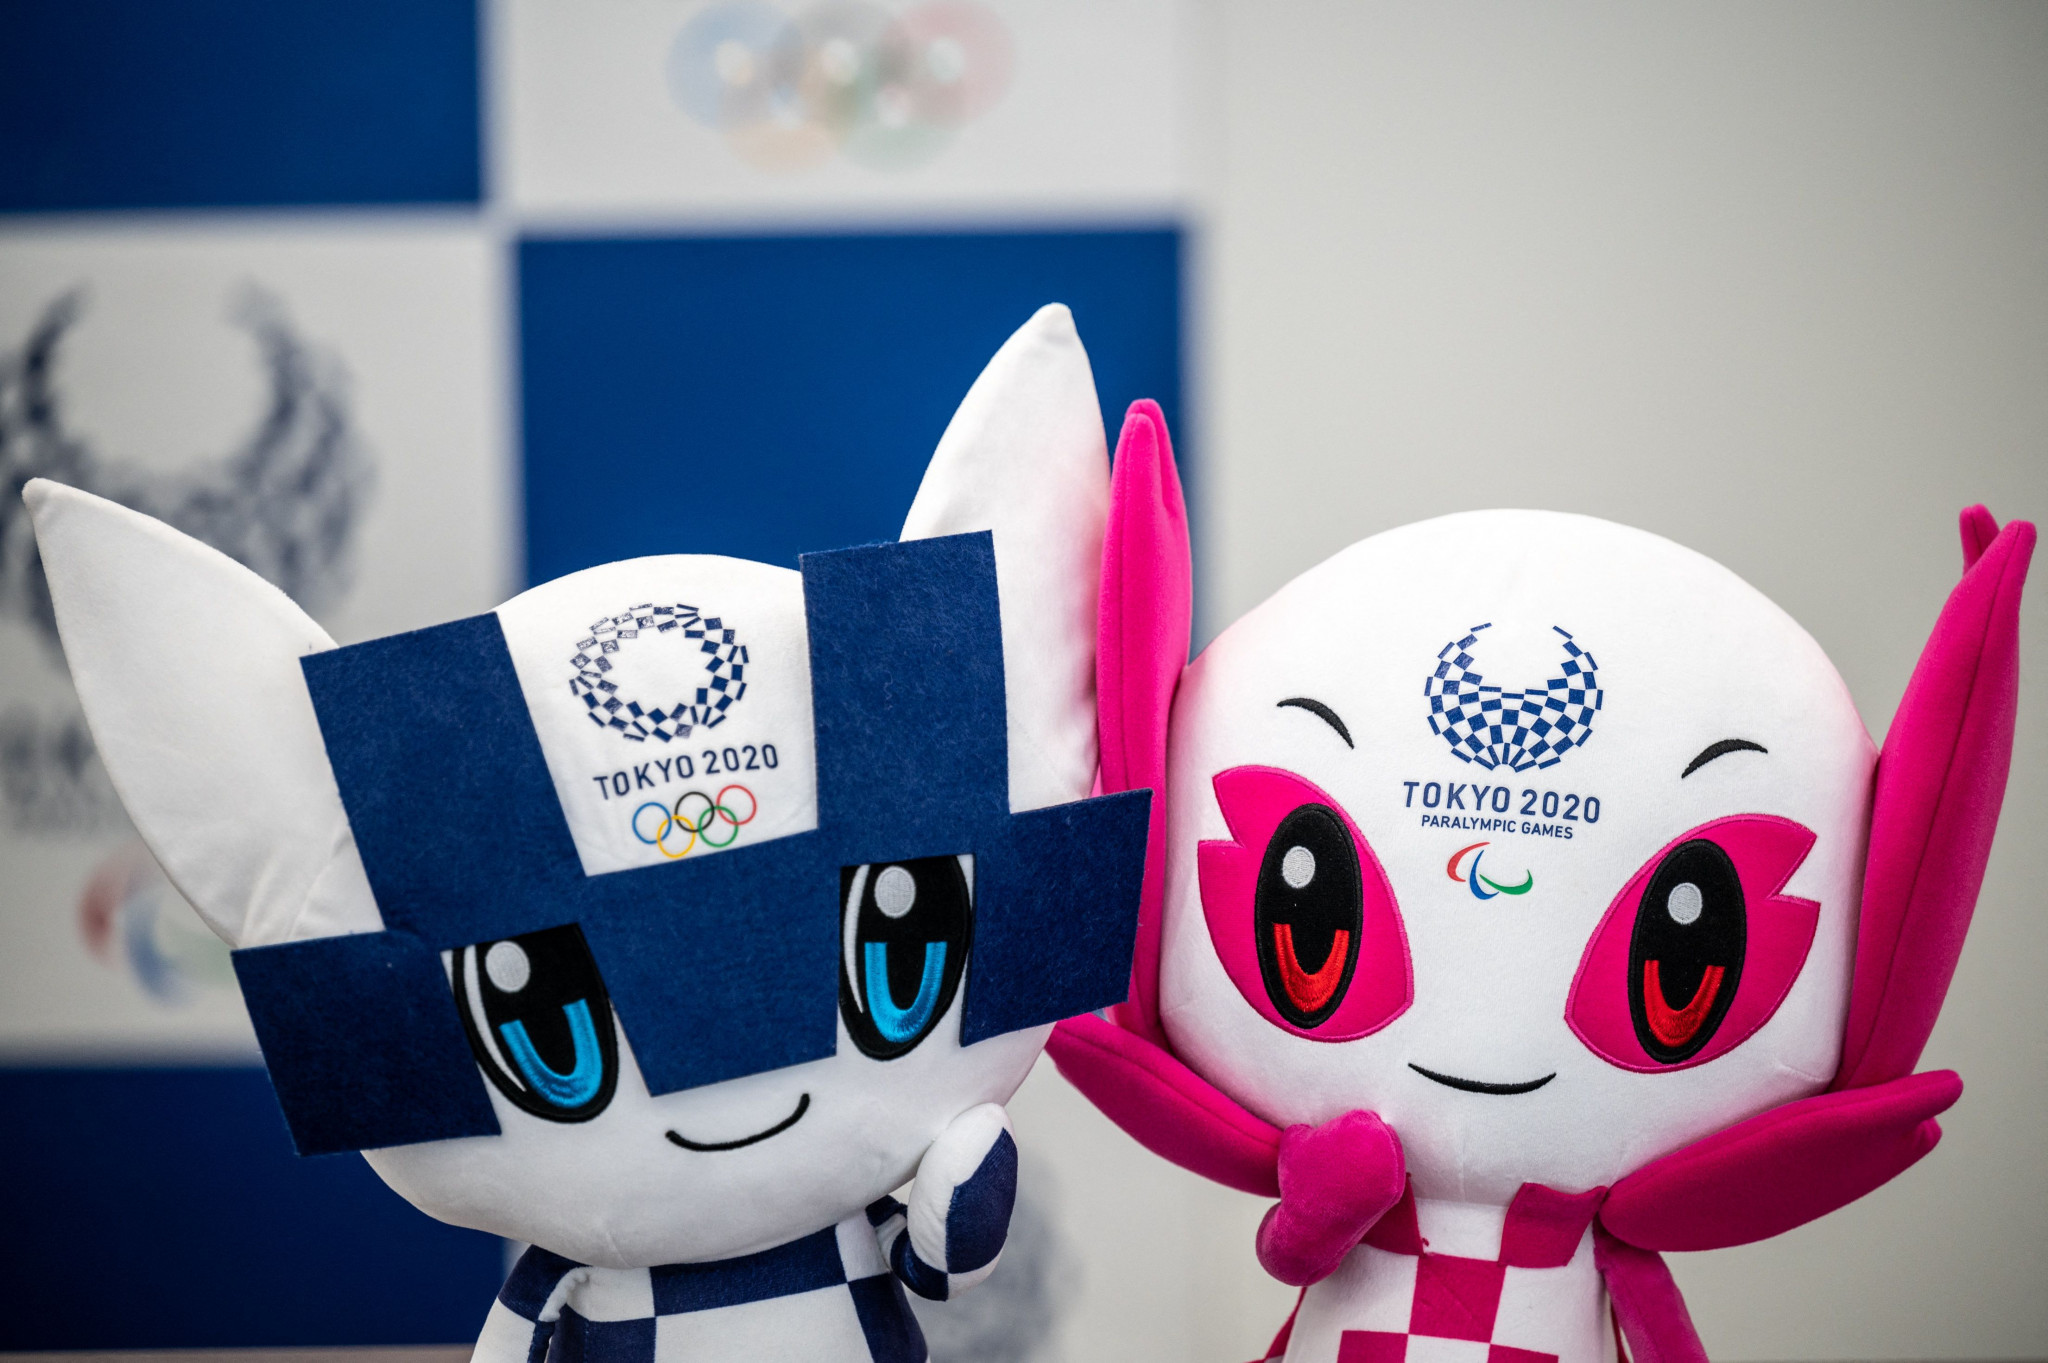 Tokyo 2020 mascot distributor latest suspect in Olympic bribery case 